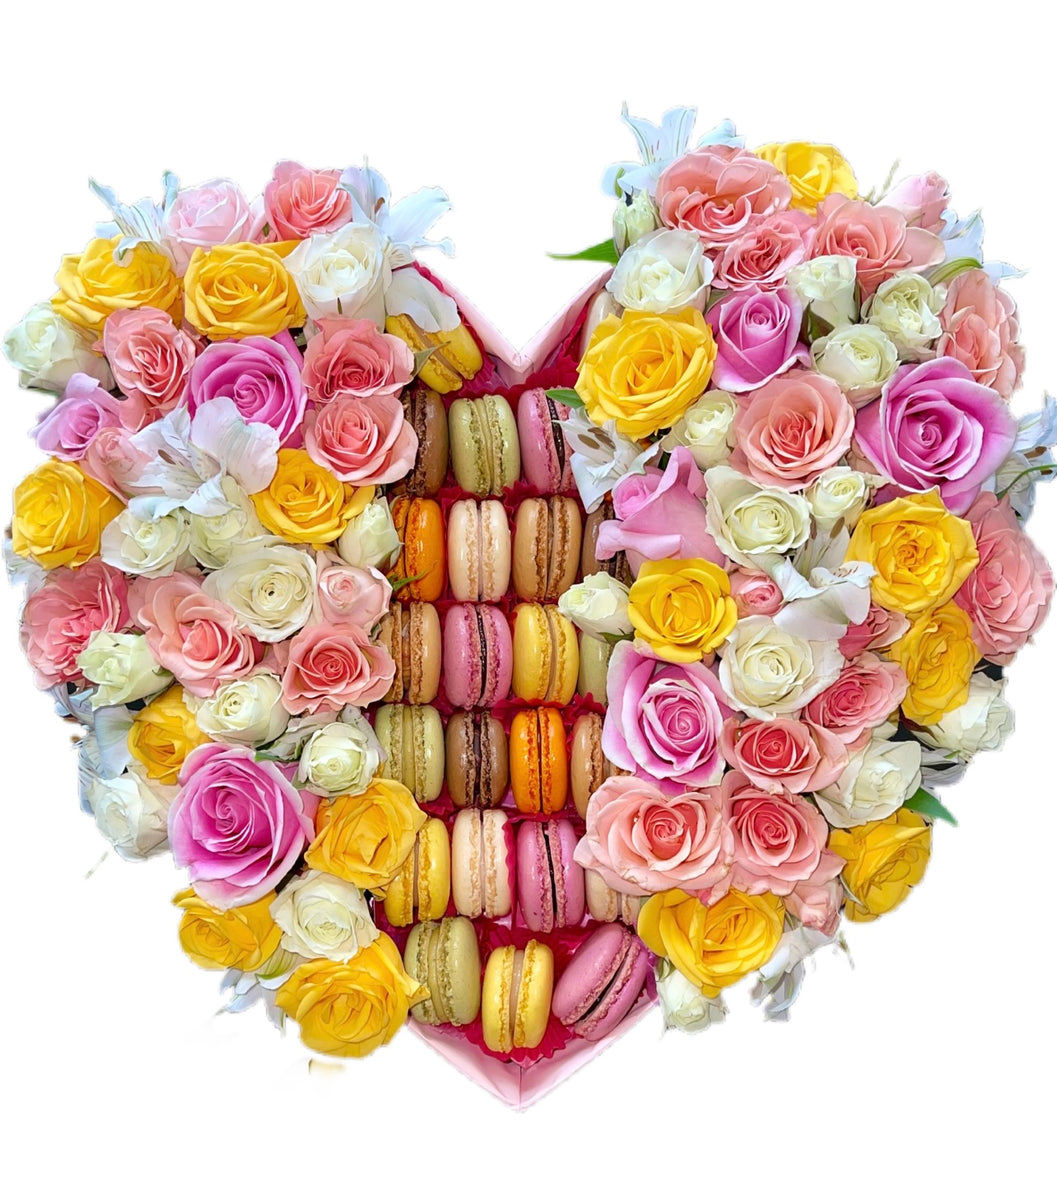 80pcs/pack Flower Bouquet Accessories Set Including Heart-shaped